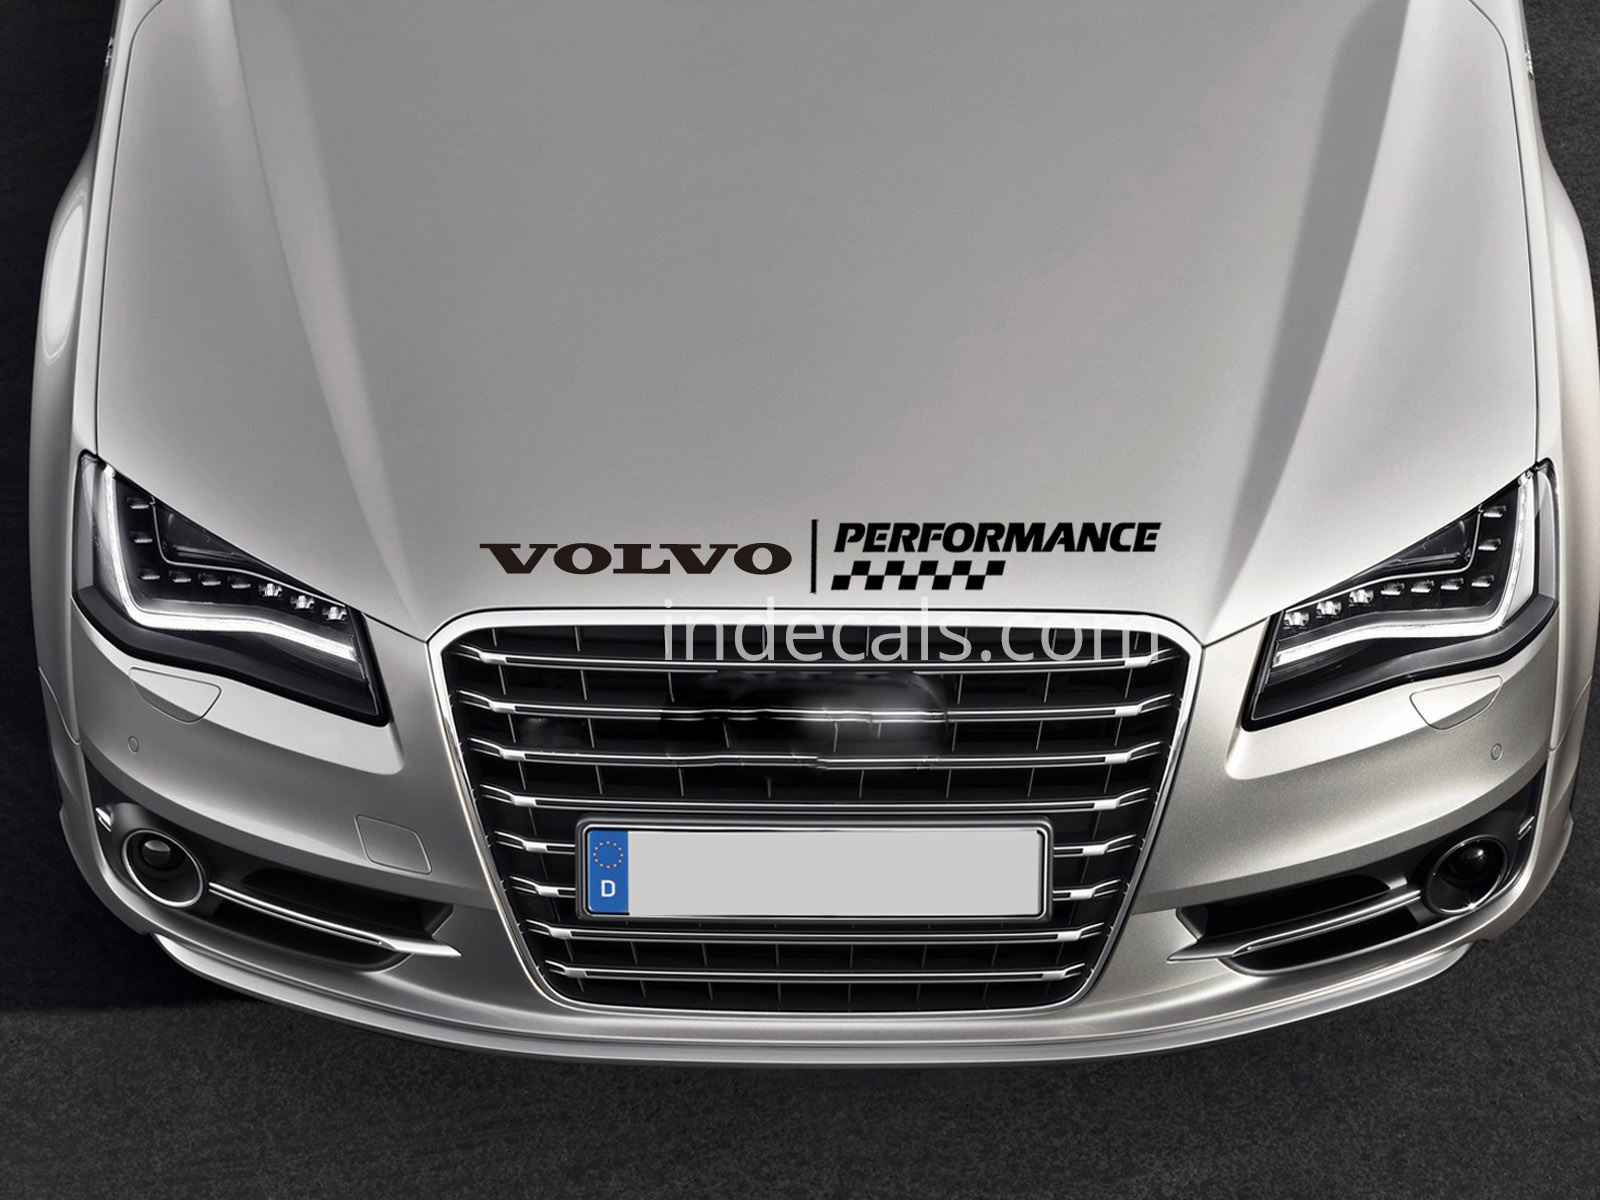 1 x Volvo Performance Sticker for Bonnet - Black